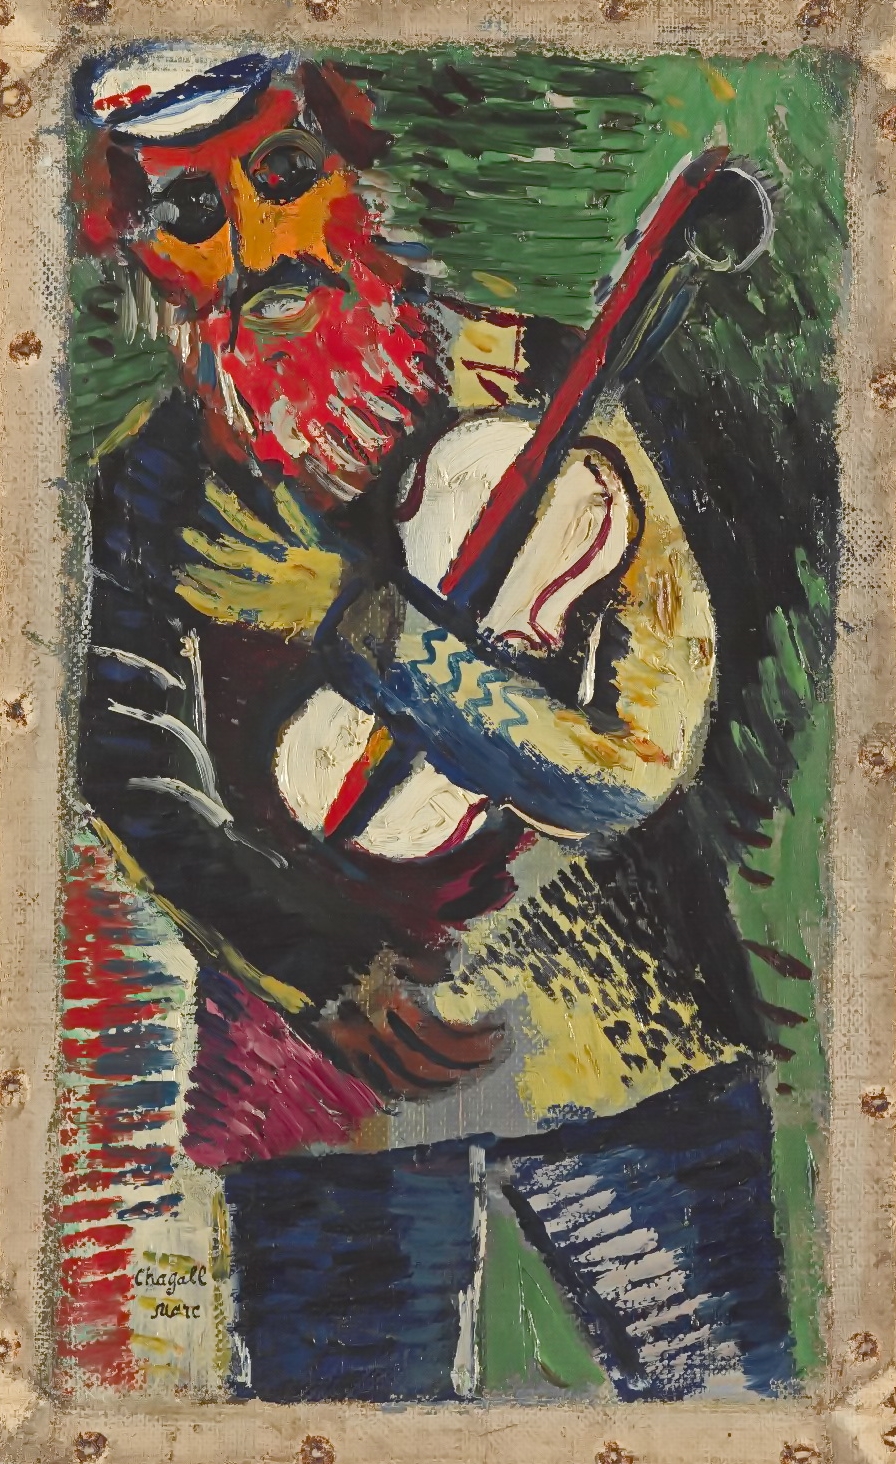 Marc+Chagall-1887-1985 (307).jpg